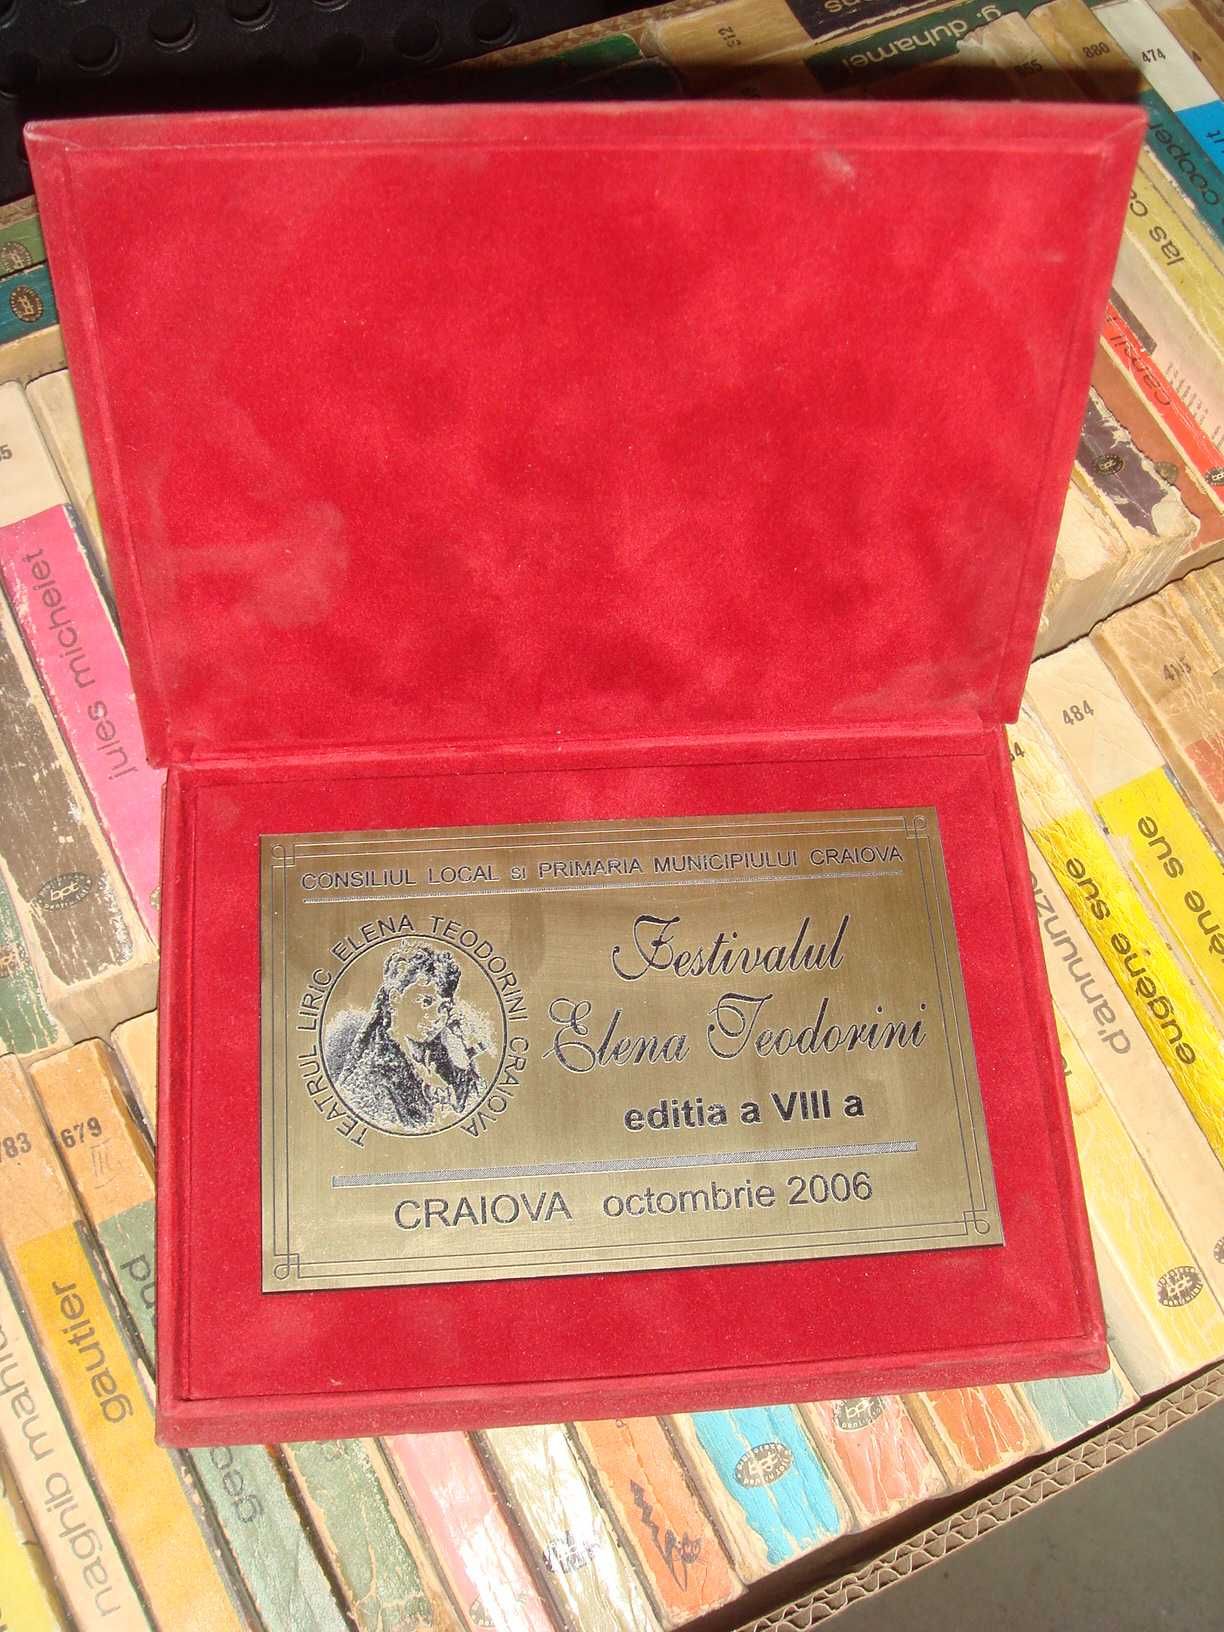 Medalie Festivalul Elena Teodorini Editia VIII Craiova Octombrie 2006